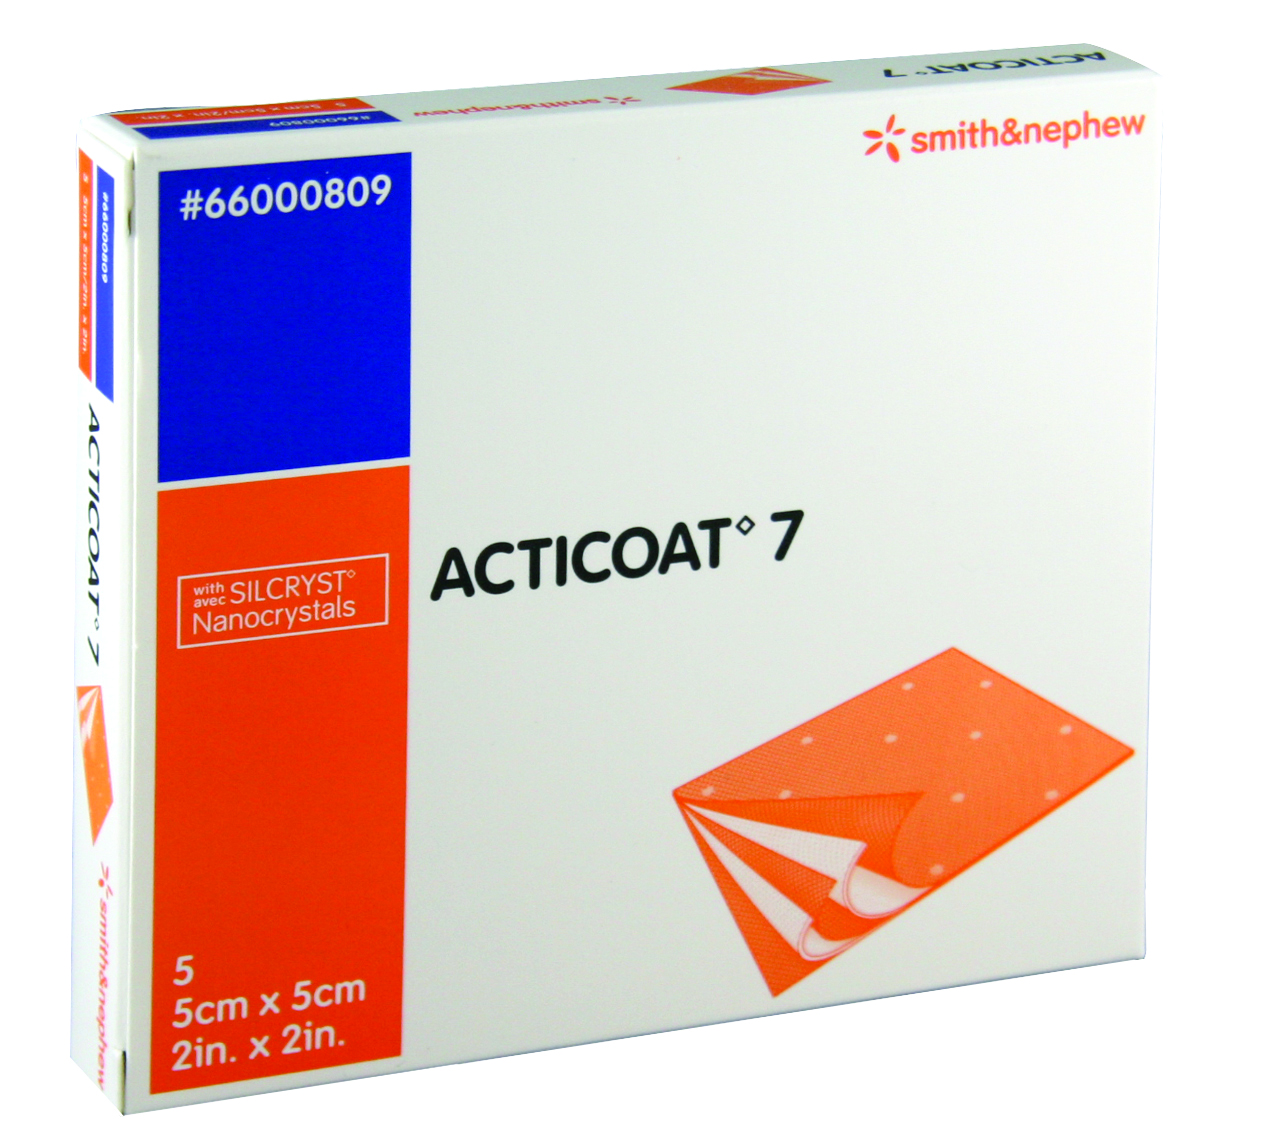 Acticoat 7 Antimicrobial Dressing 5cm x 5cm image 1